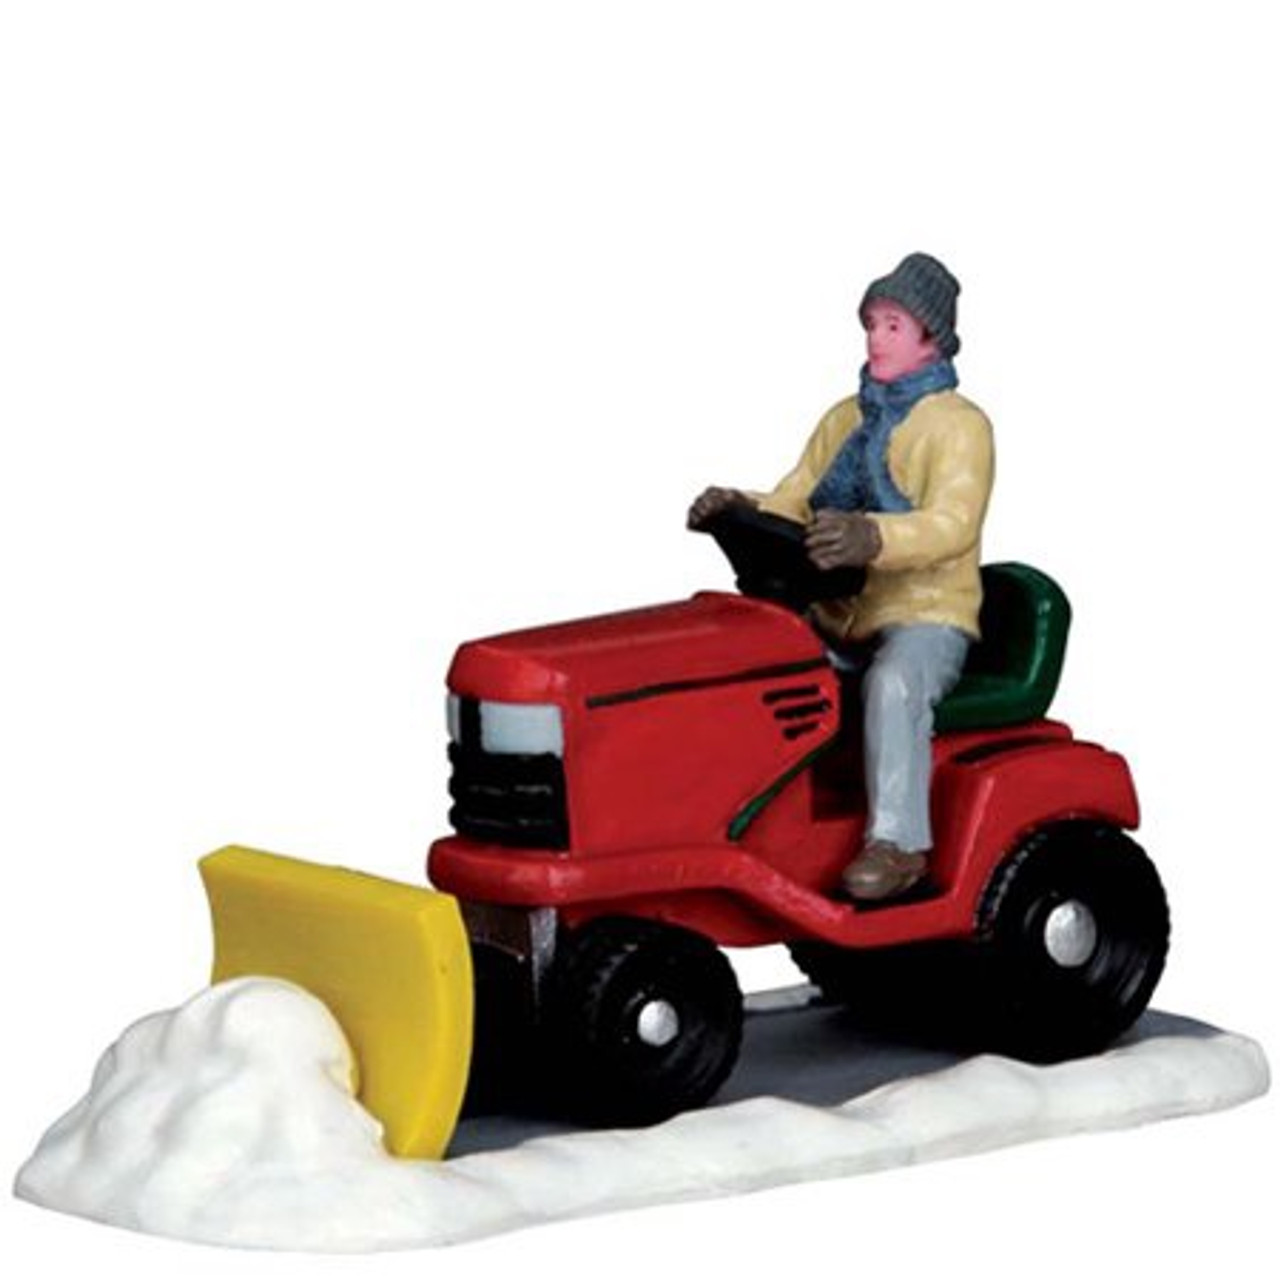 Ride-on Snow Plow